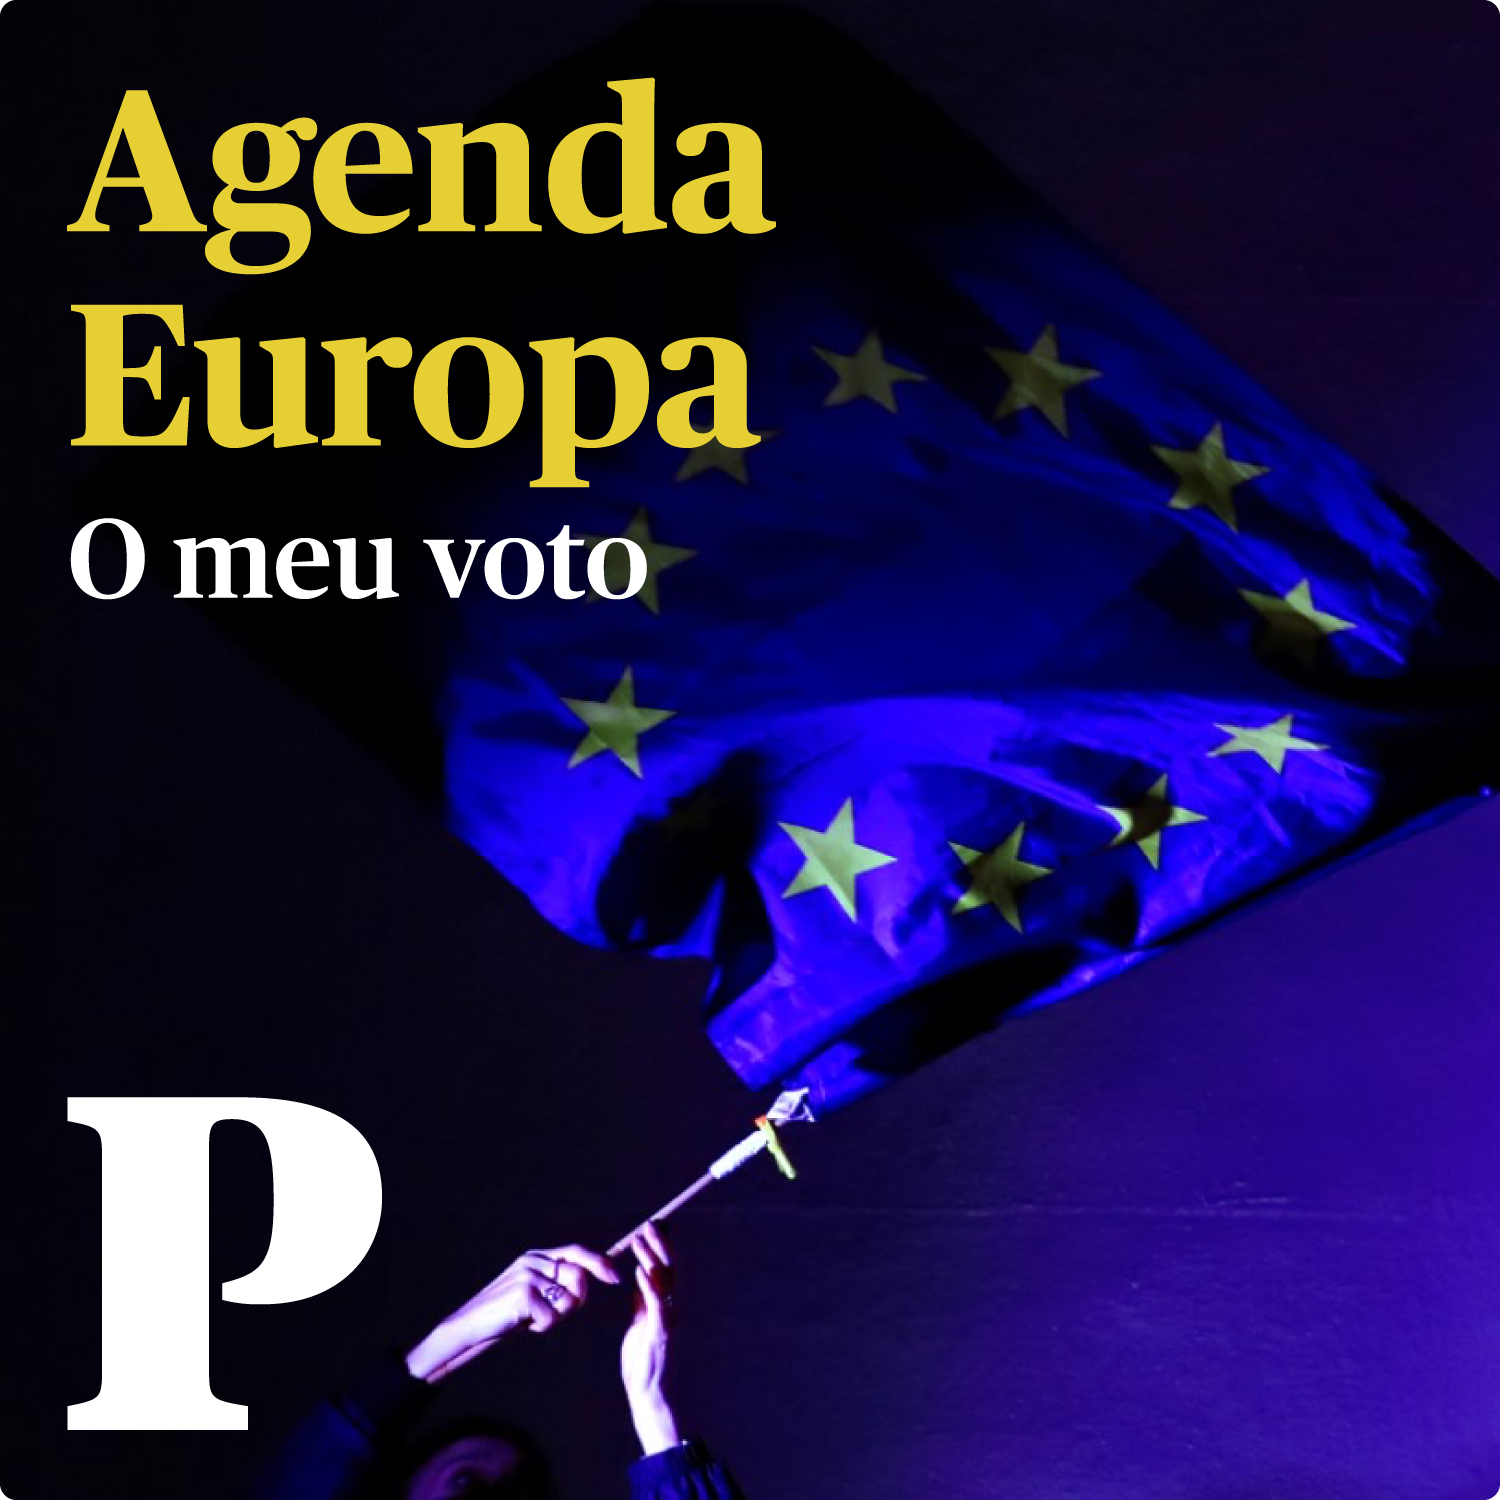 Agenda Europa podcast show image